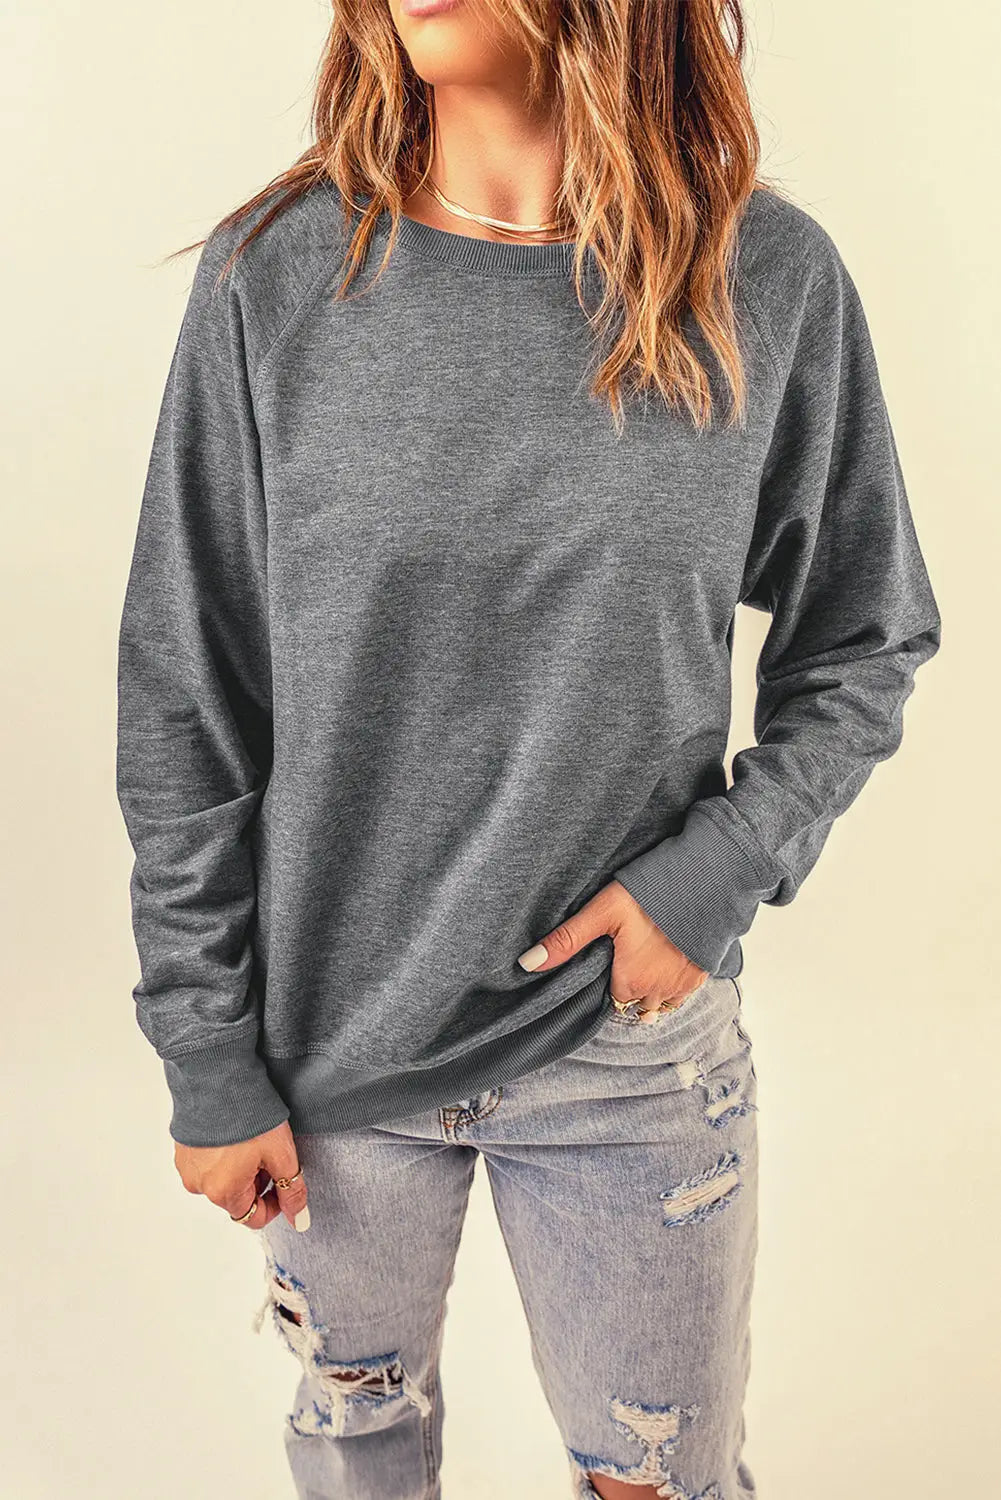 Pink pumpkin spice reglan sleeve sweatshirt - gray / s / 62.7% polyester + 37.3% cotton - graphic